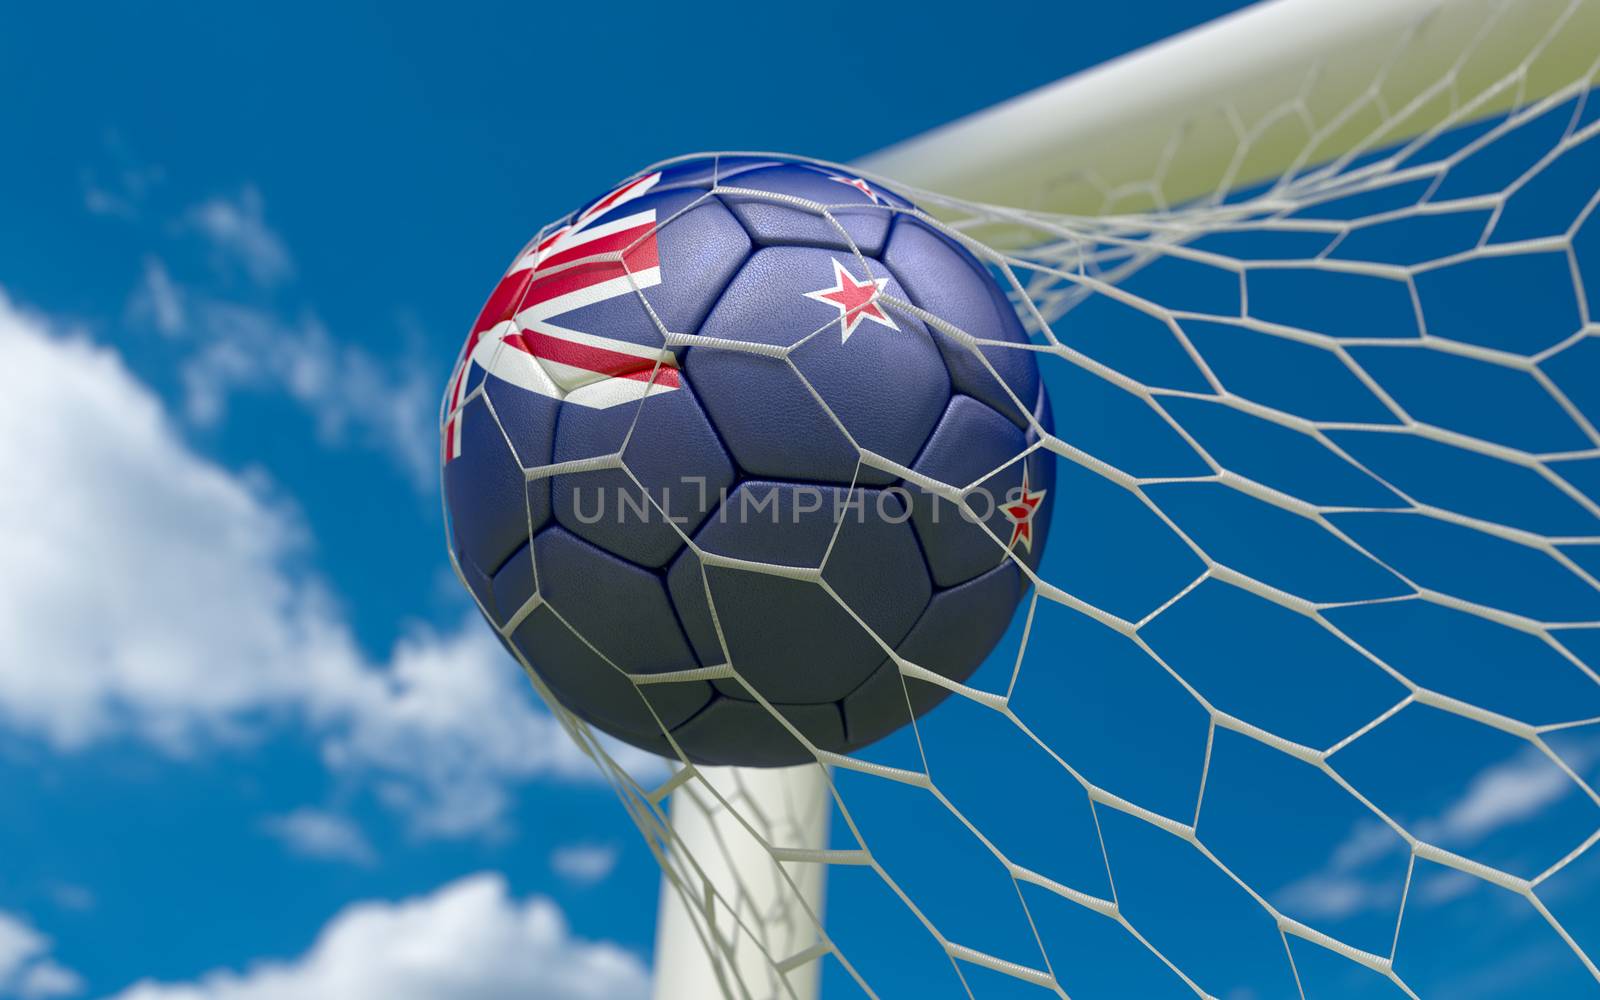 New Zealand flag and soccer ball, football in goal net